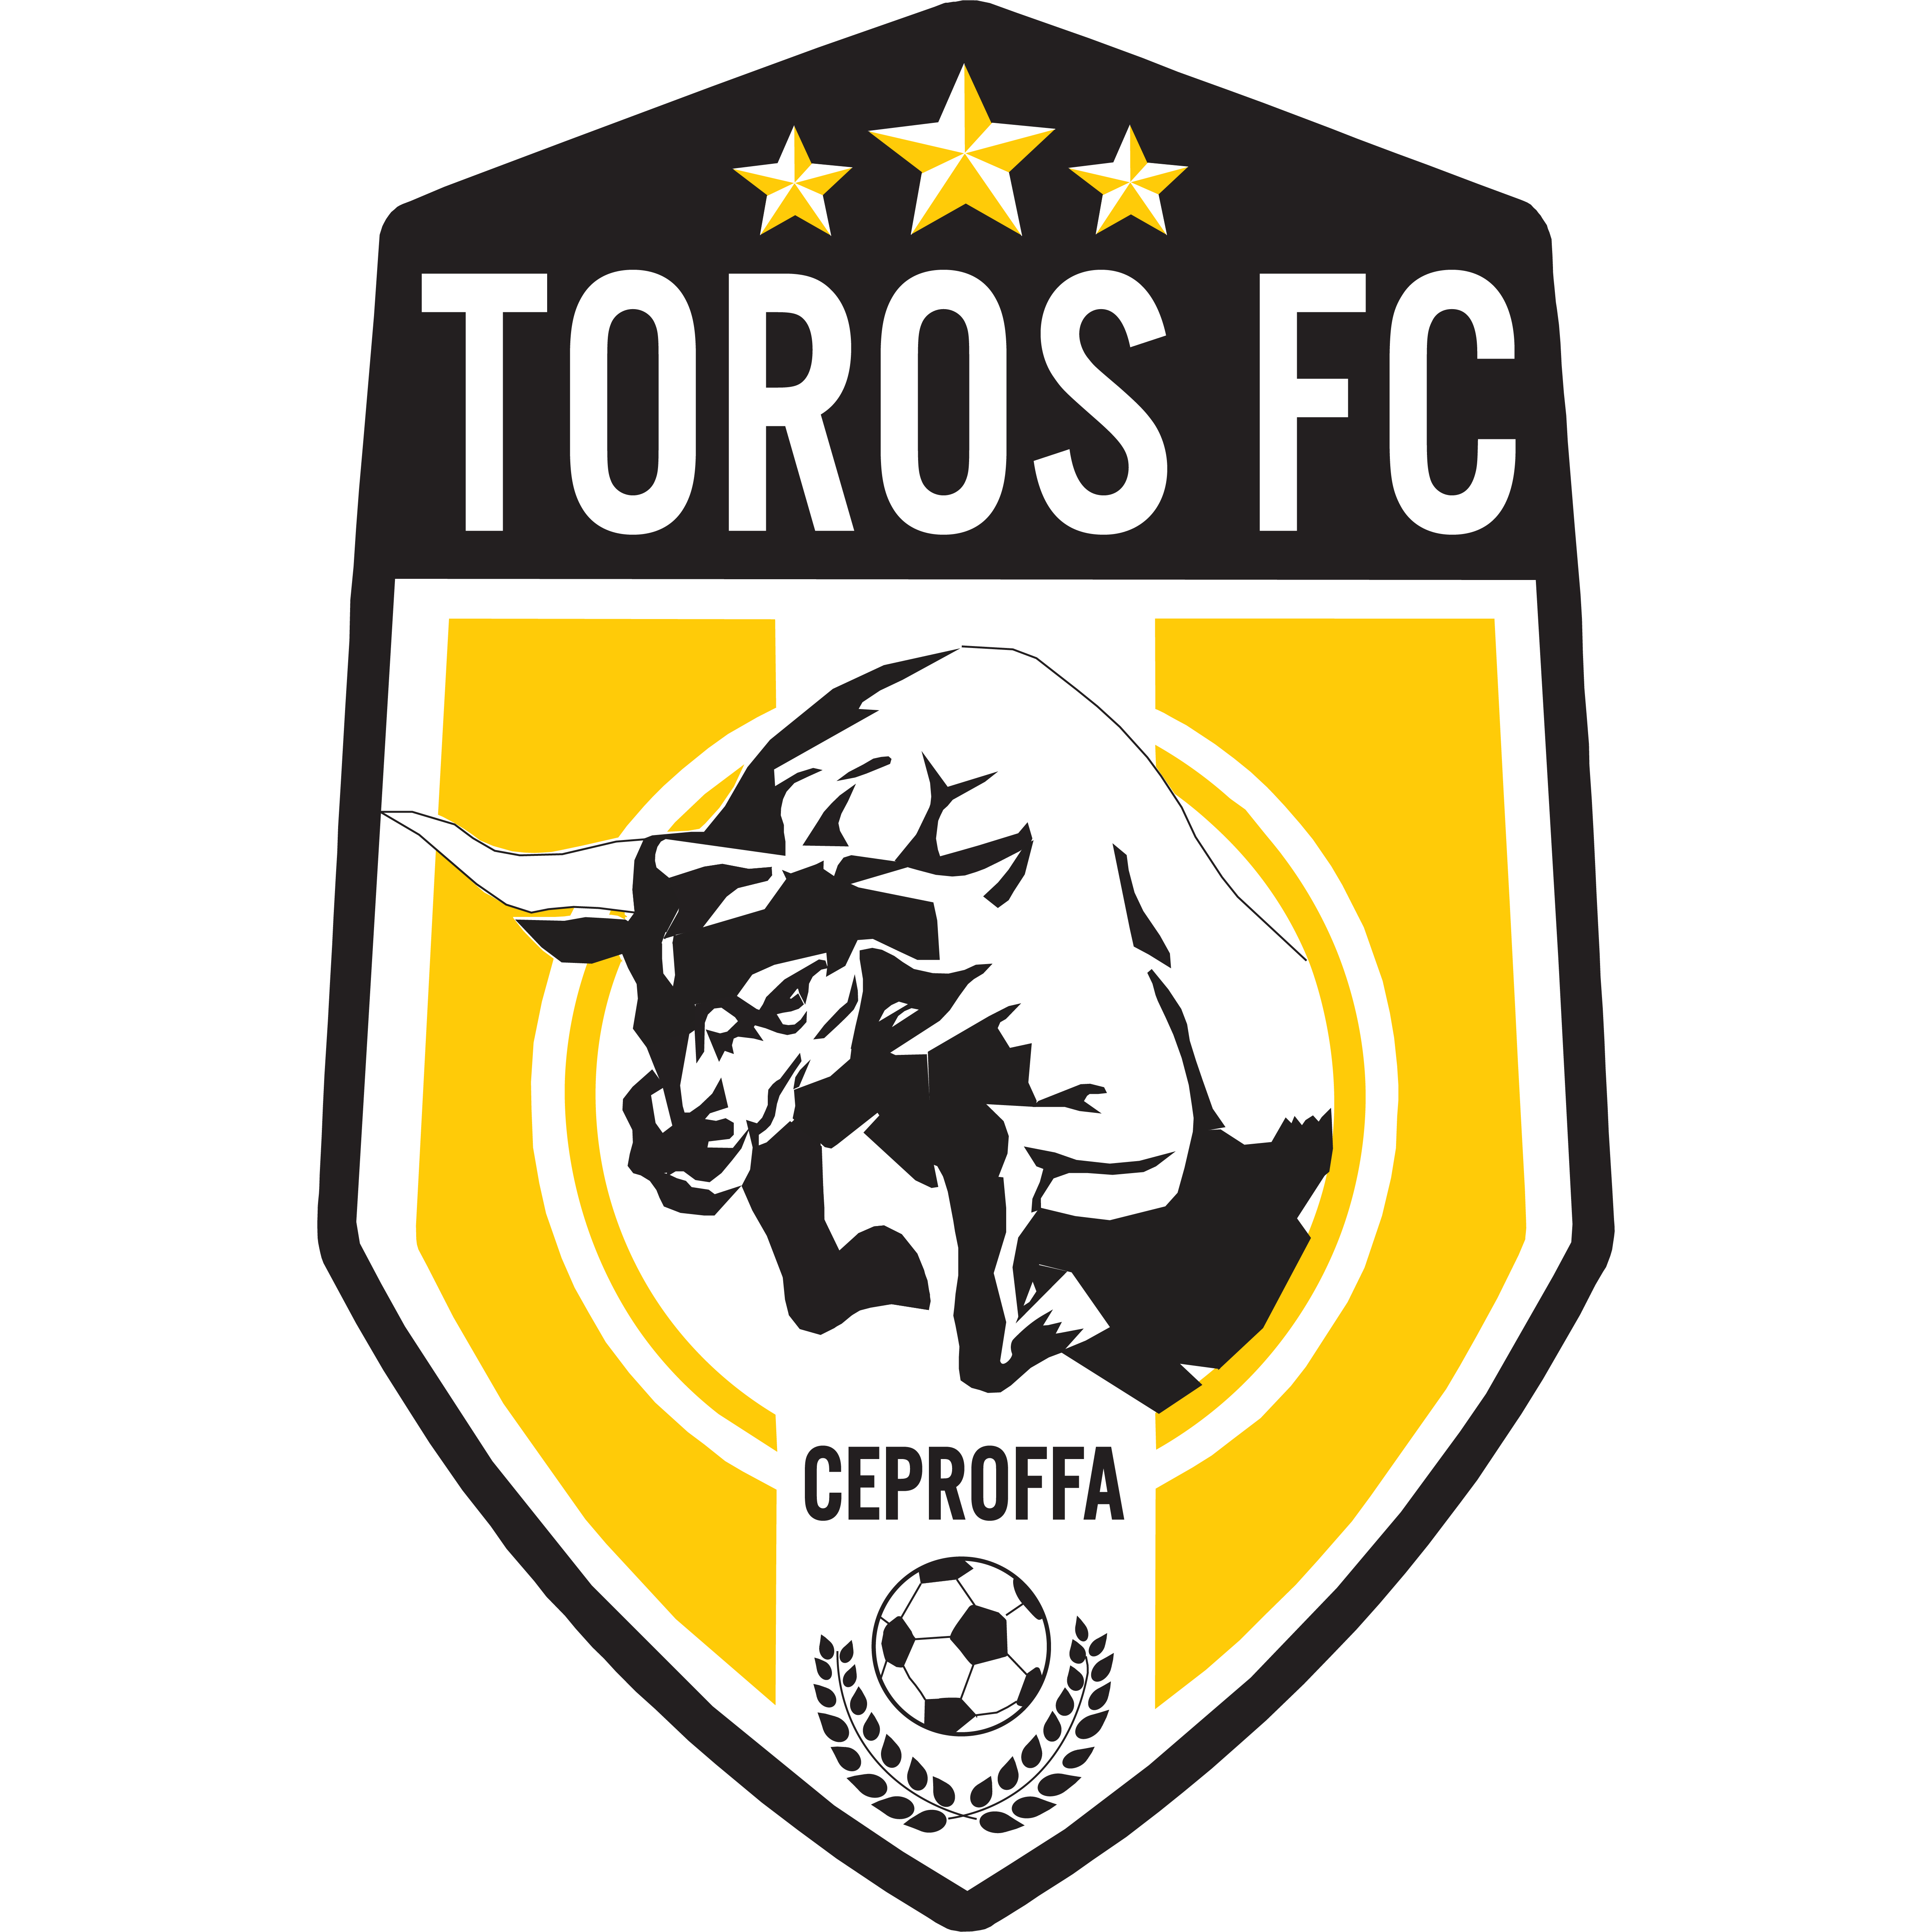 TOROS FC cEPROFFA